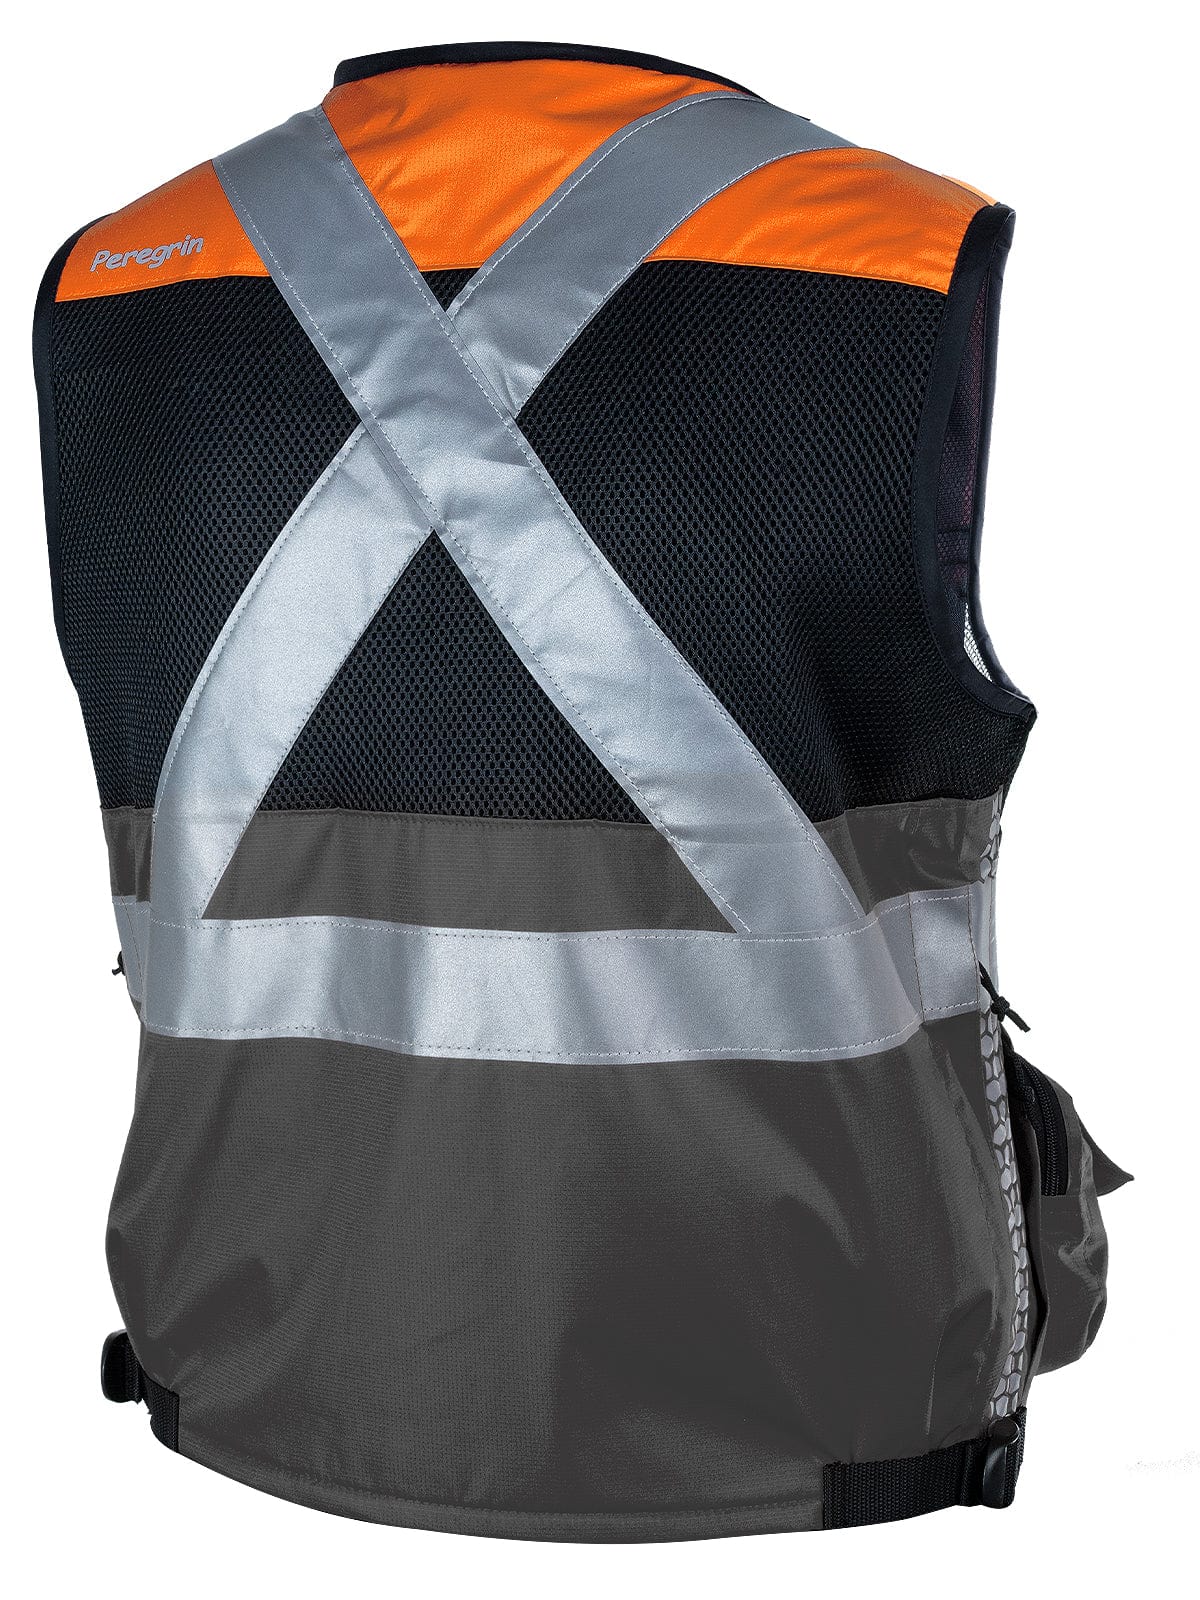 Peregrin Reflective Safety Vest N1 Executive Orange